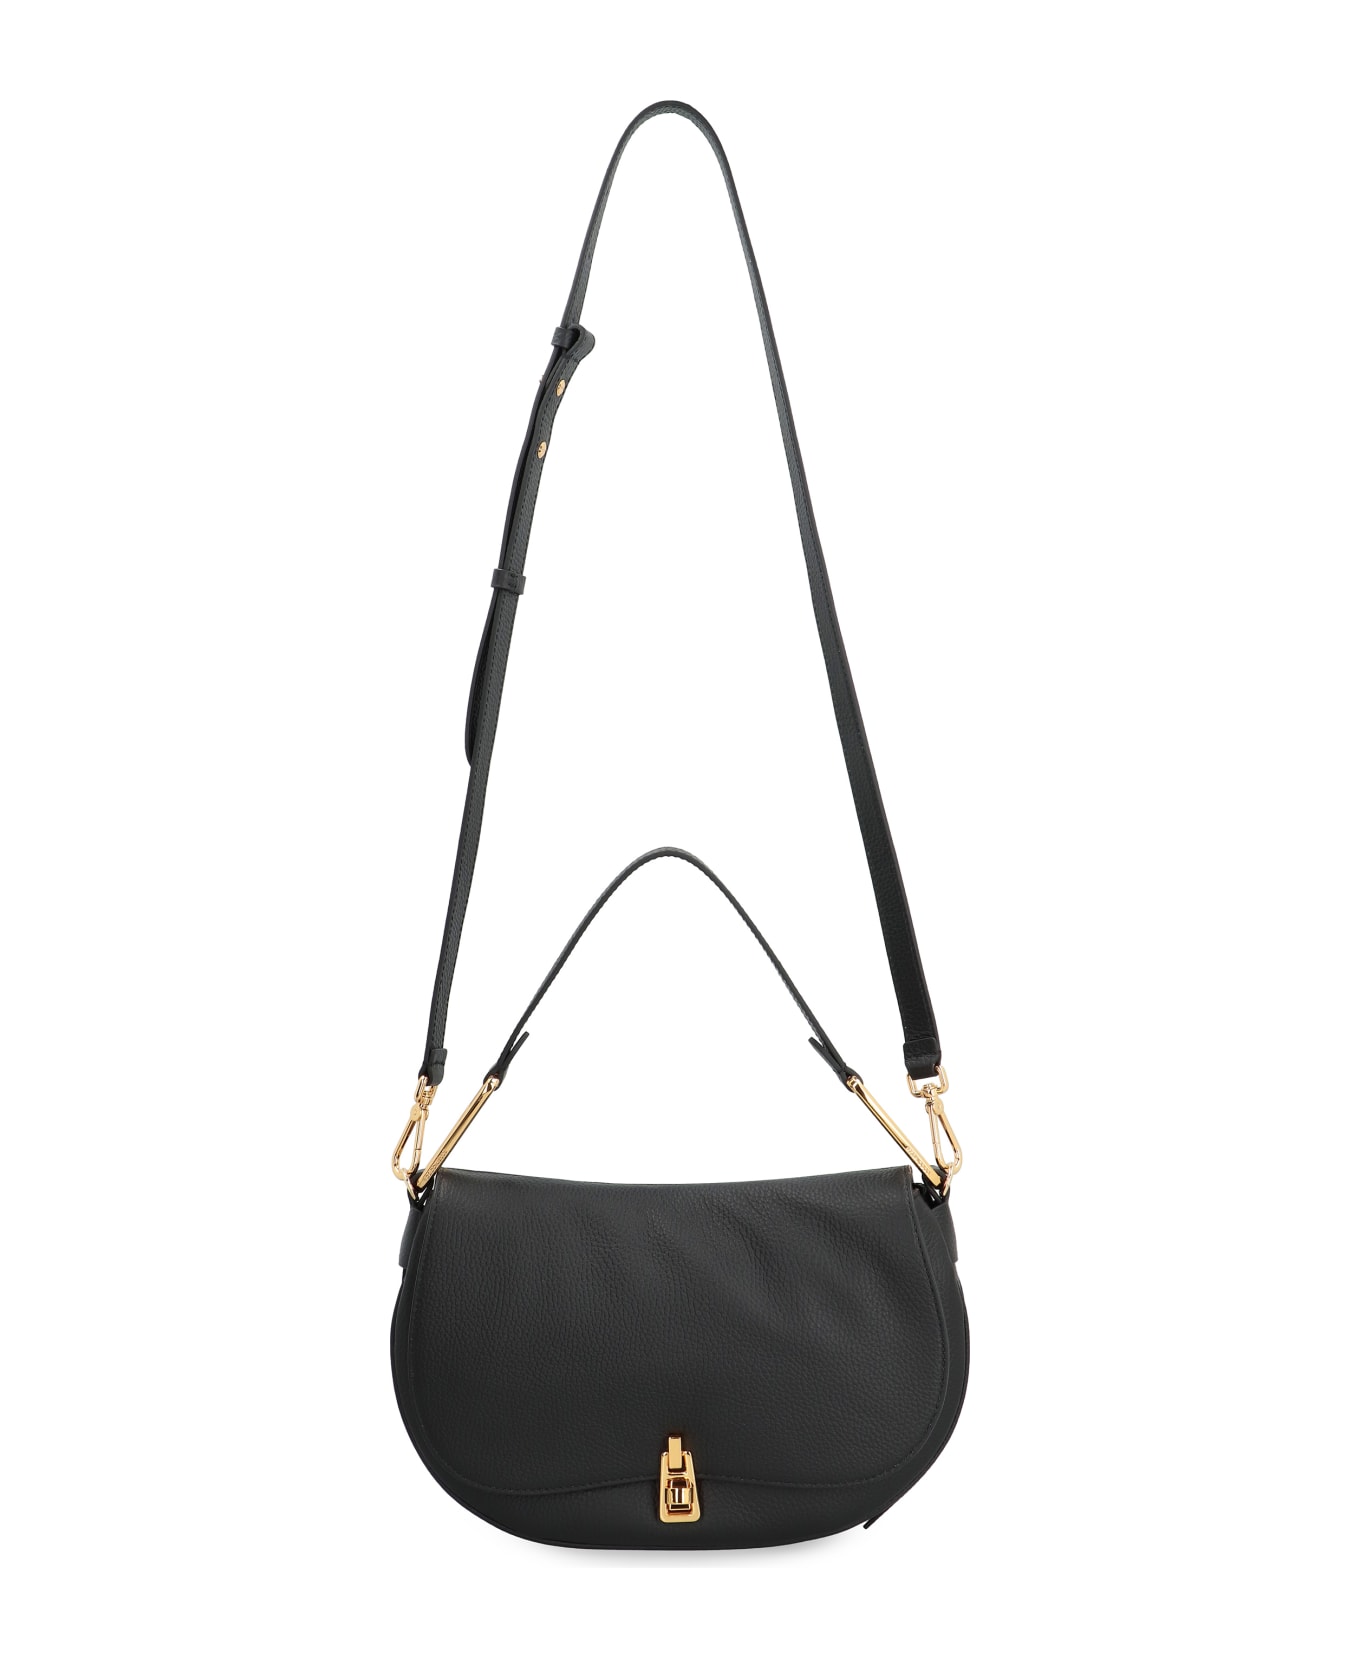 Coccinelle Magie Soft Leather Handbag - black